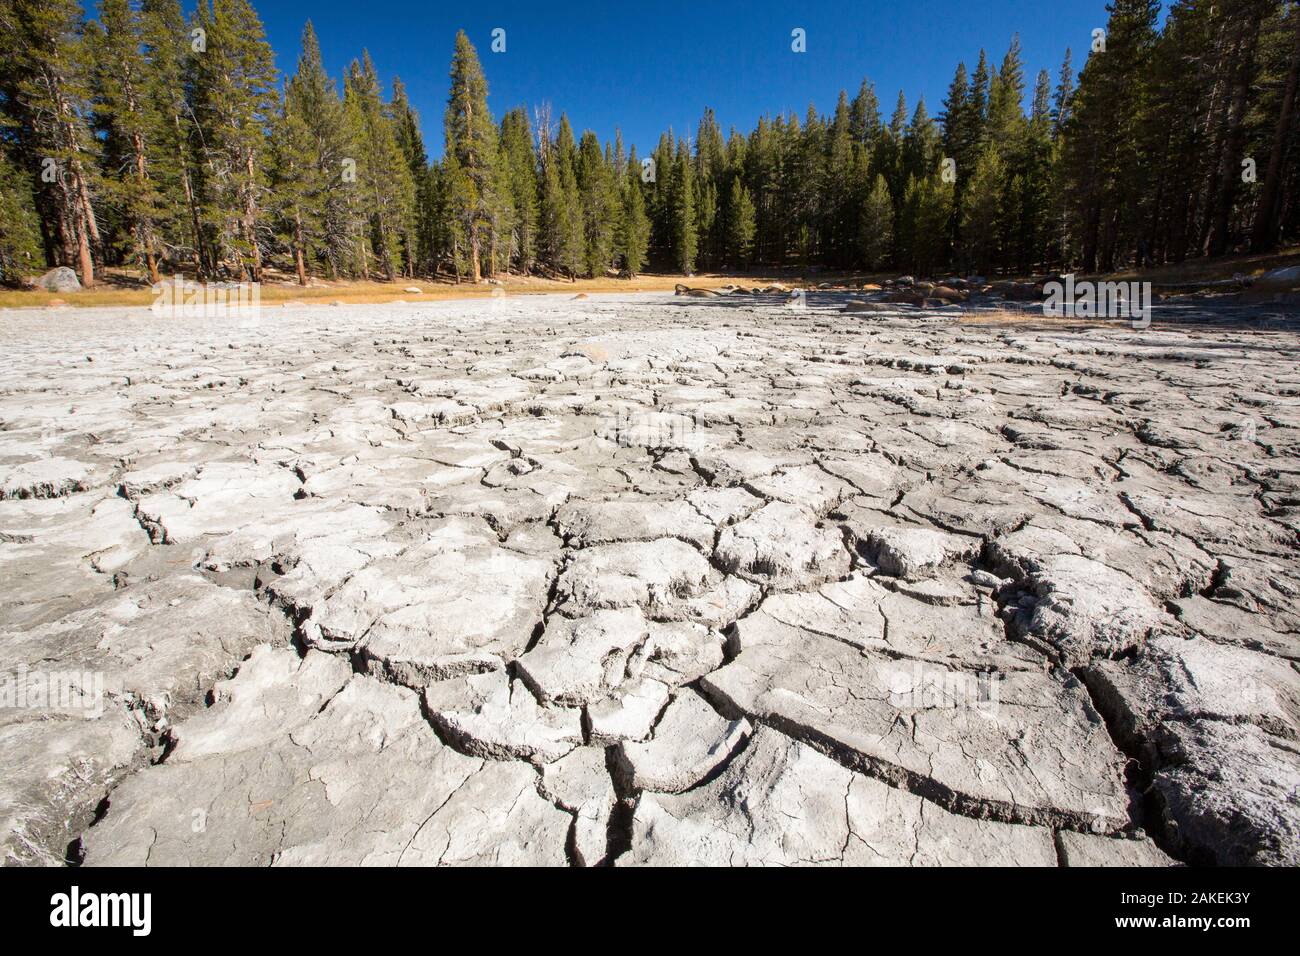 Drought impacted lake in Yosemite National Park, California, USA. October 2014. Stock Photo